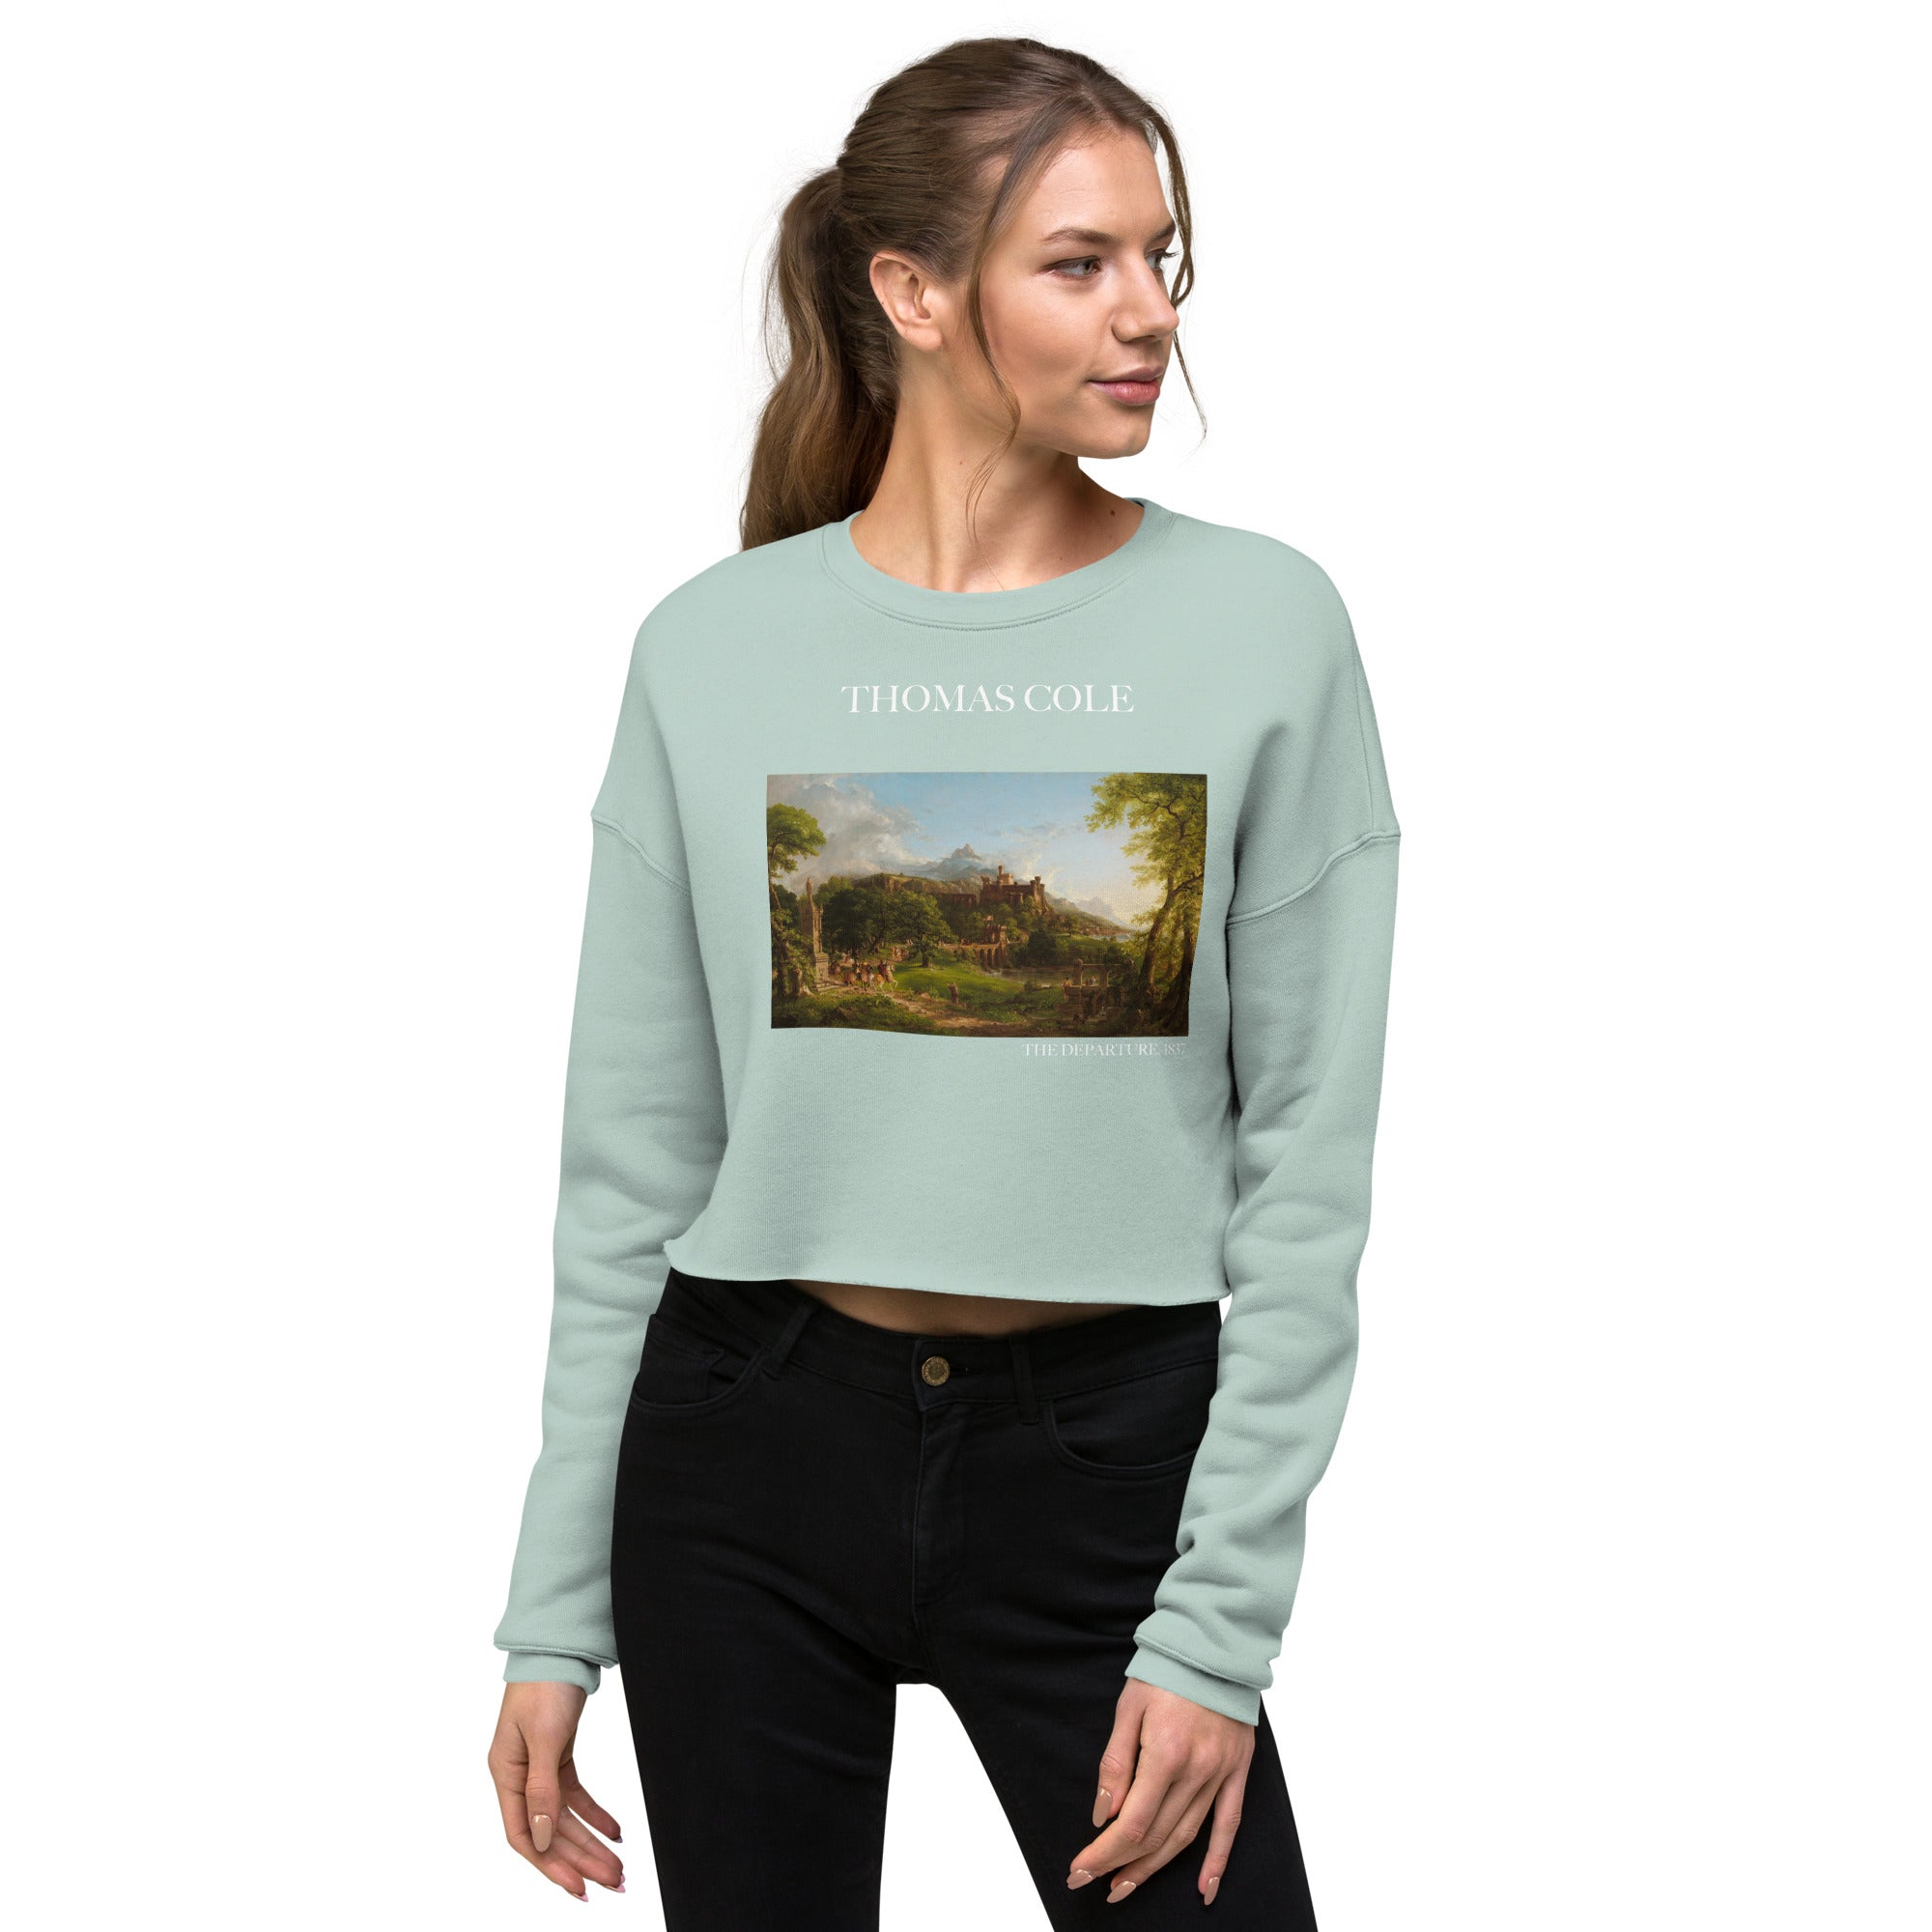 Thomas Cole 'The Departure' Famous Painting Cropped Sweatshirt | Premium Art Cropped Sweatshirt